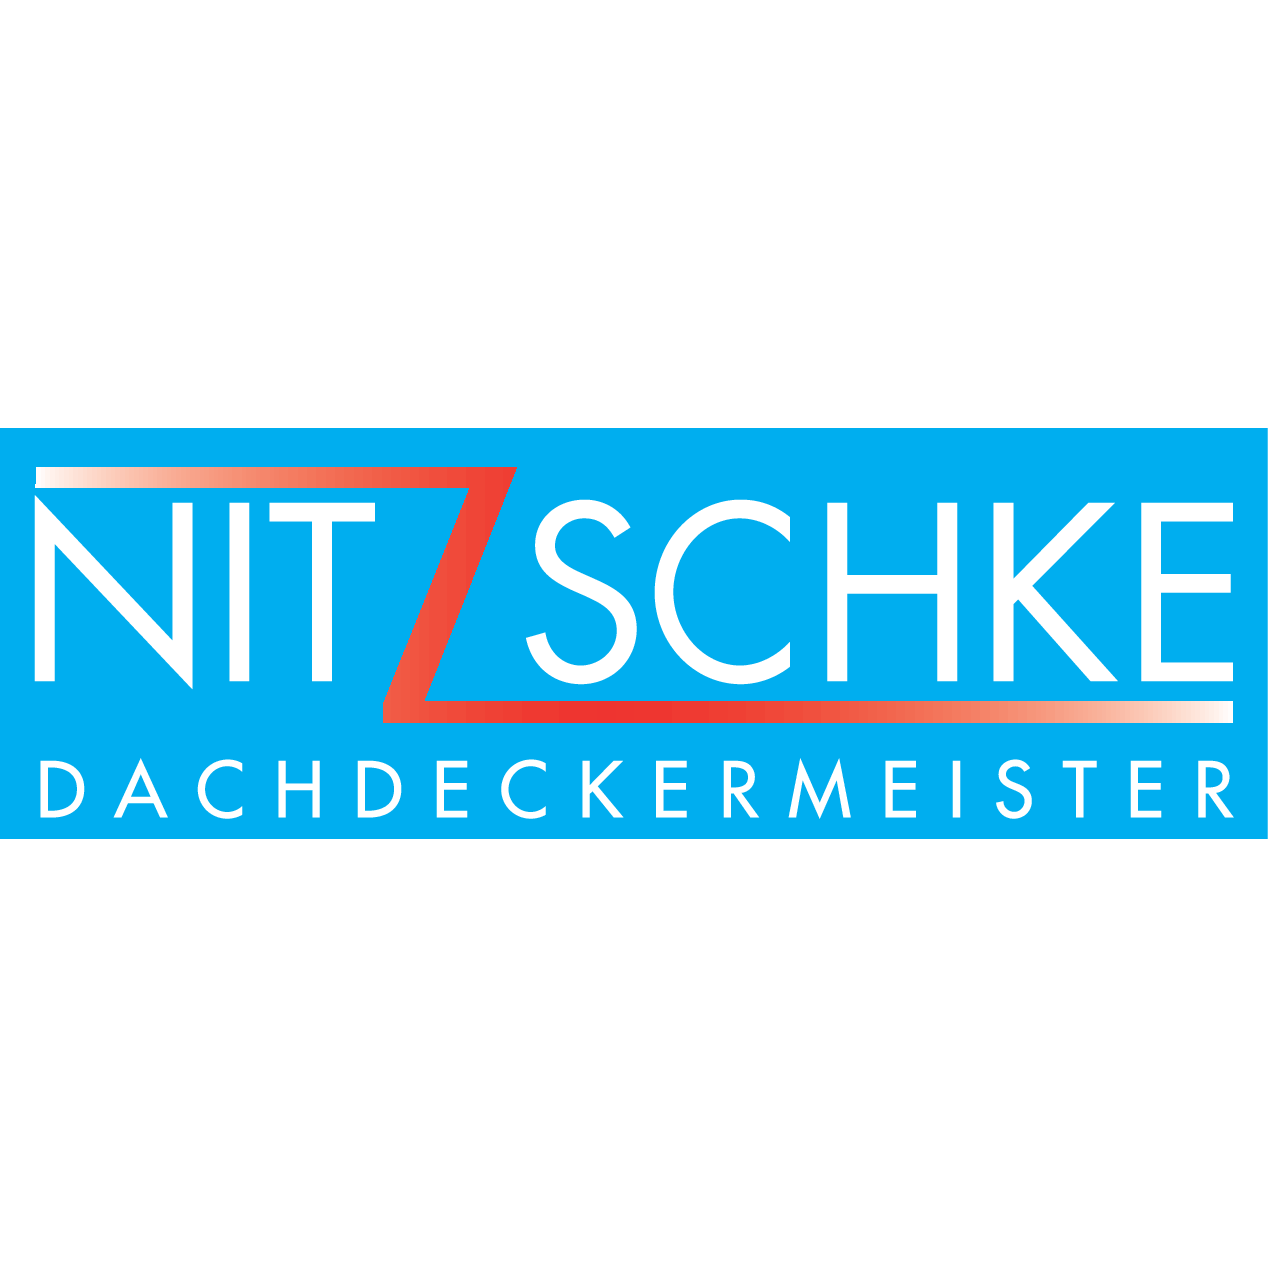 Nitzschke Dachdeckermeister in Aurach - Logo